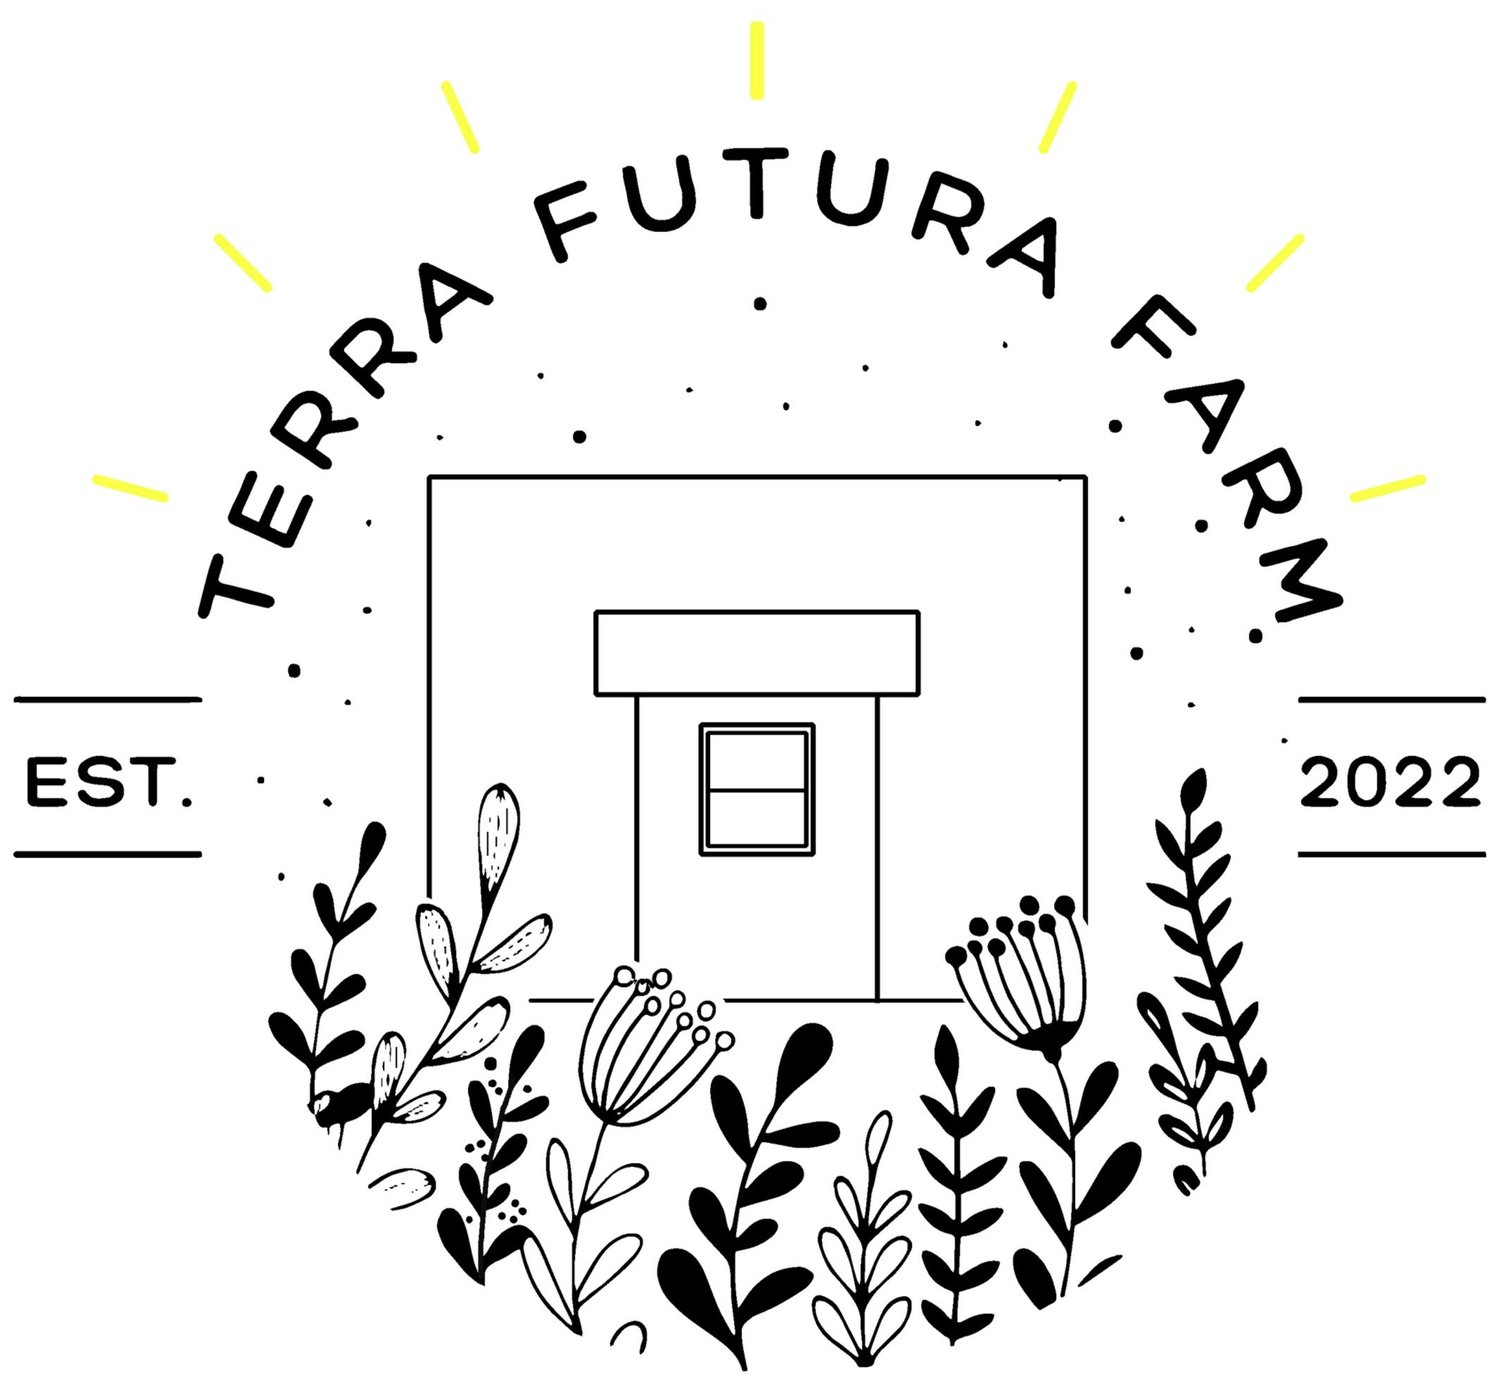 Terra Futura Farm